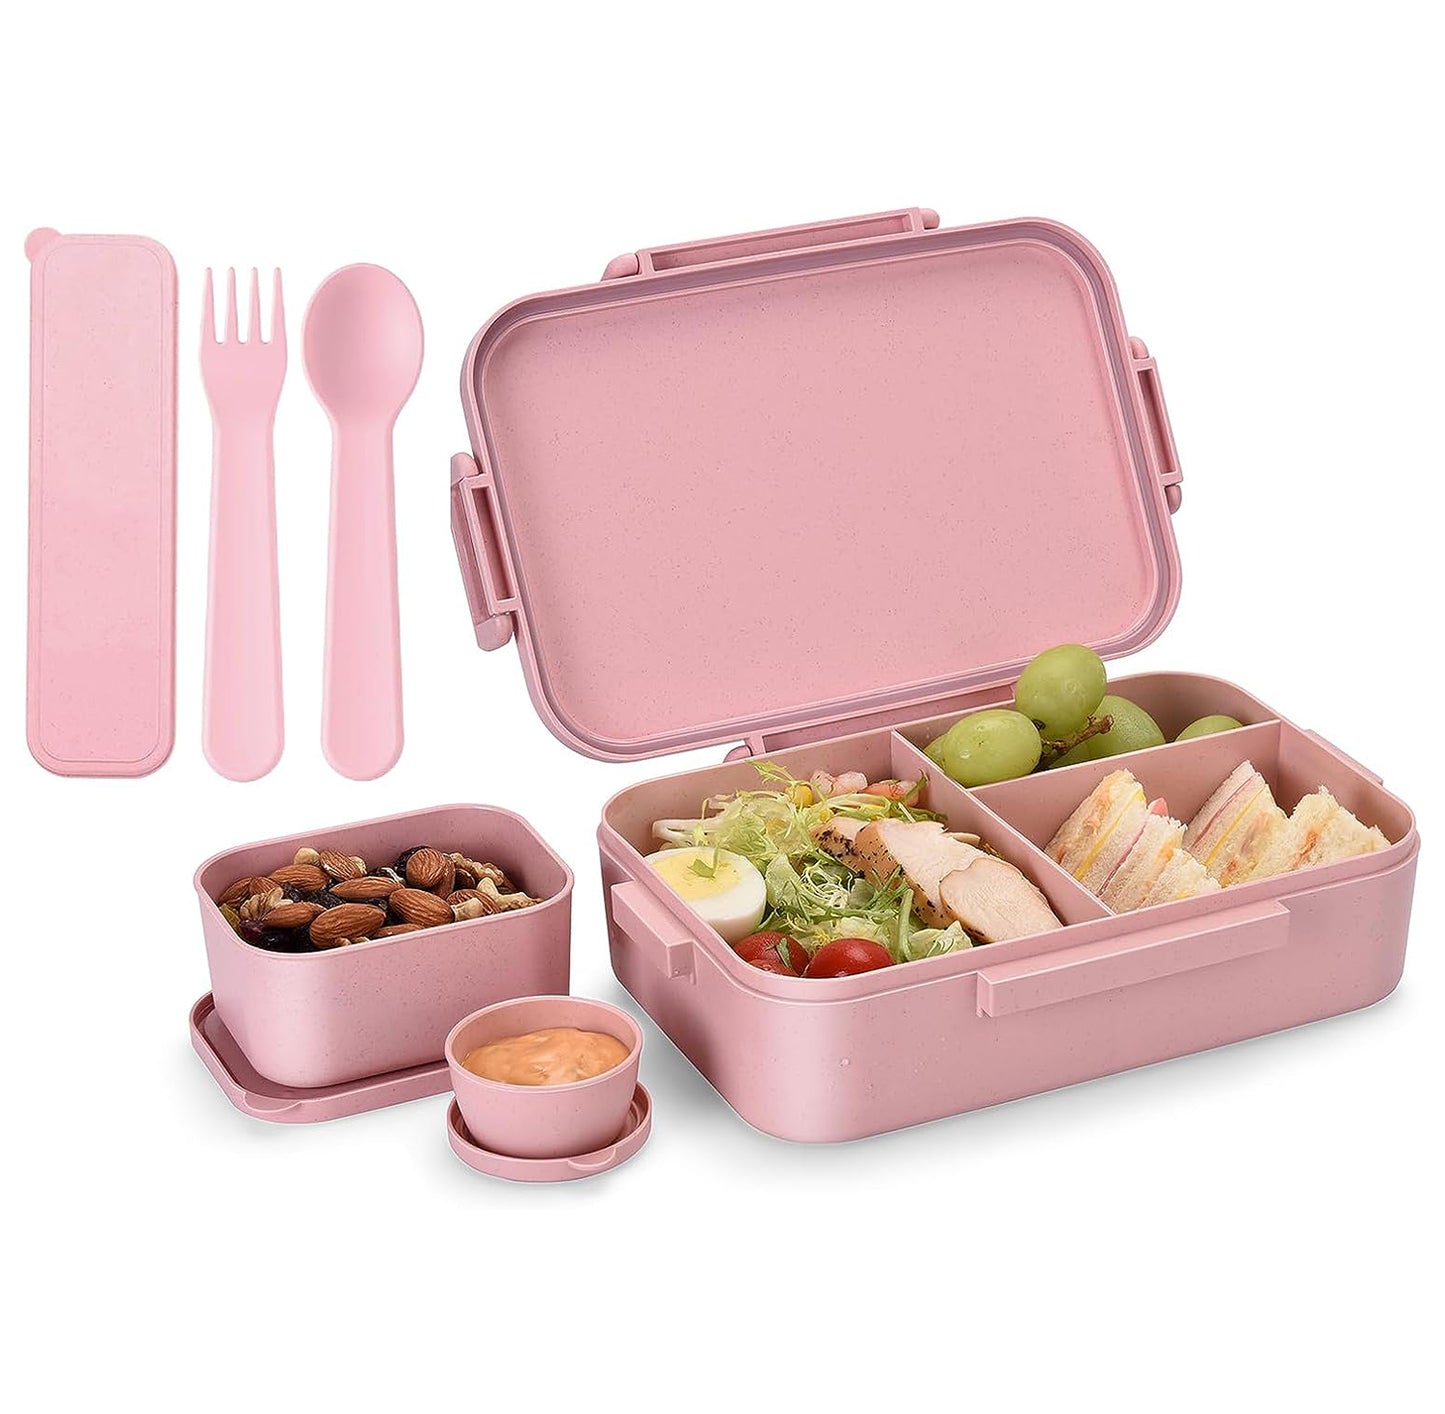 Versatile Bento Box-Leak-Proof Compartments-Ideal for School